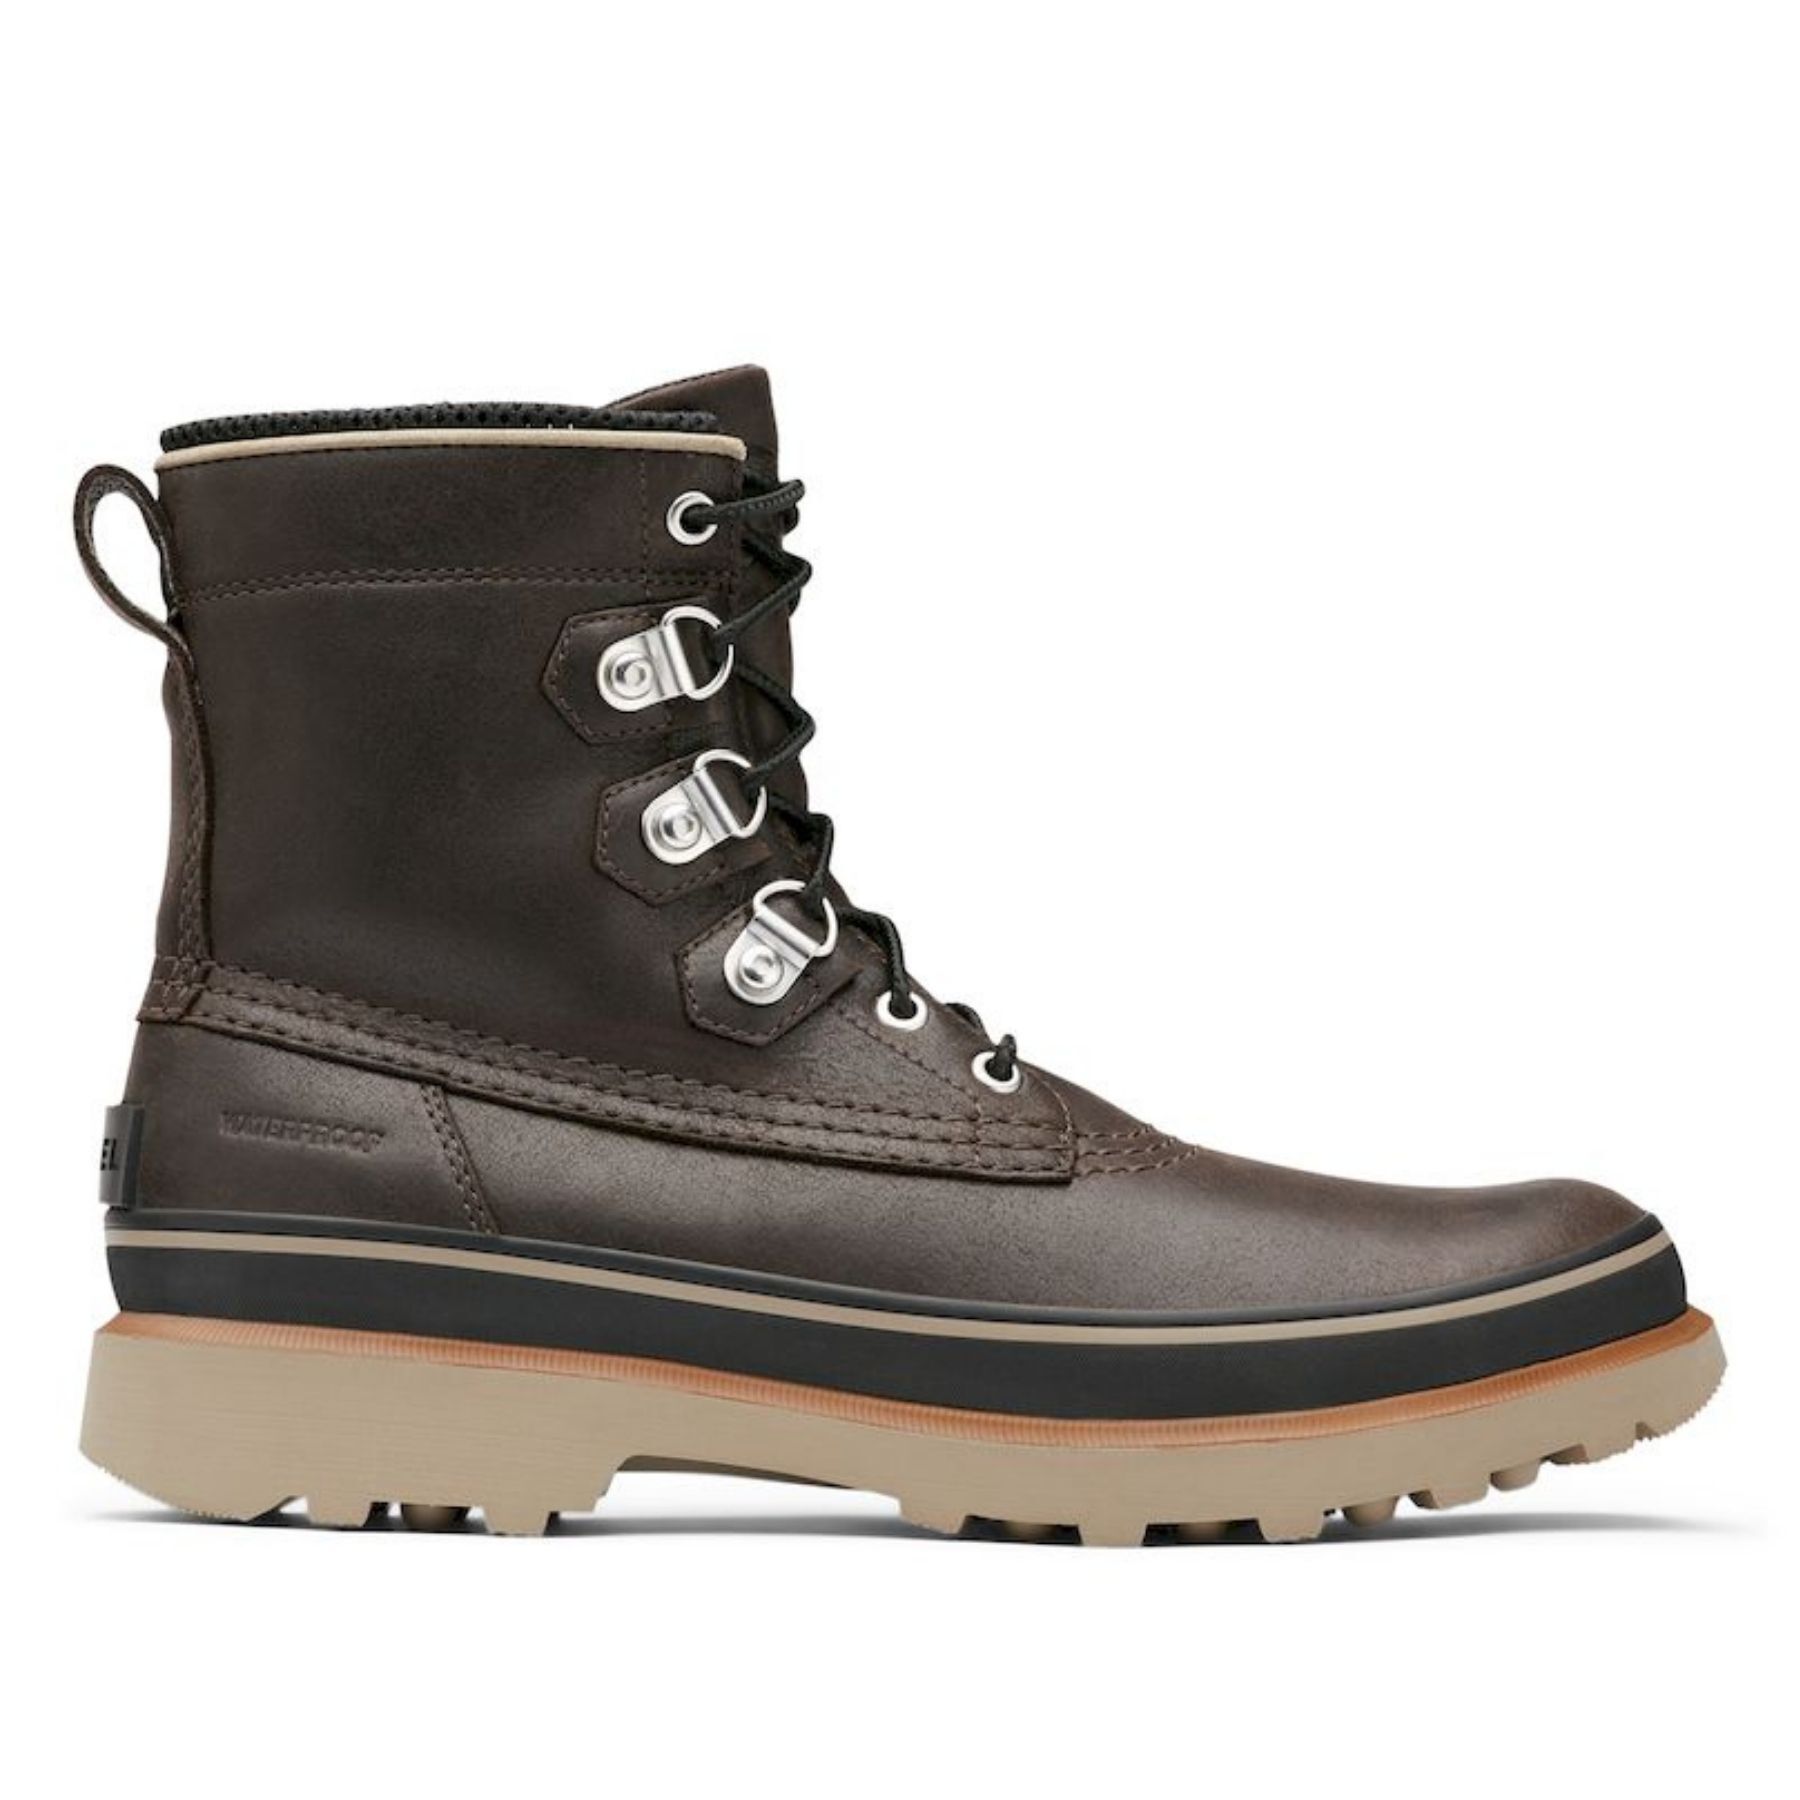 Sorel Caribou Street WP - Winter boots - Men's